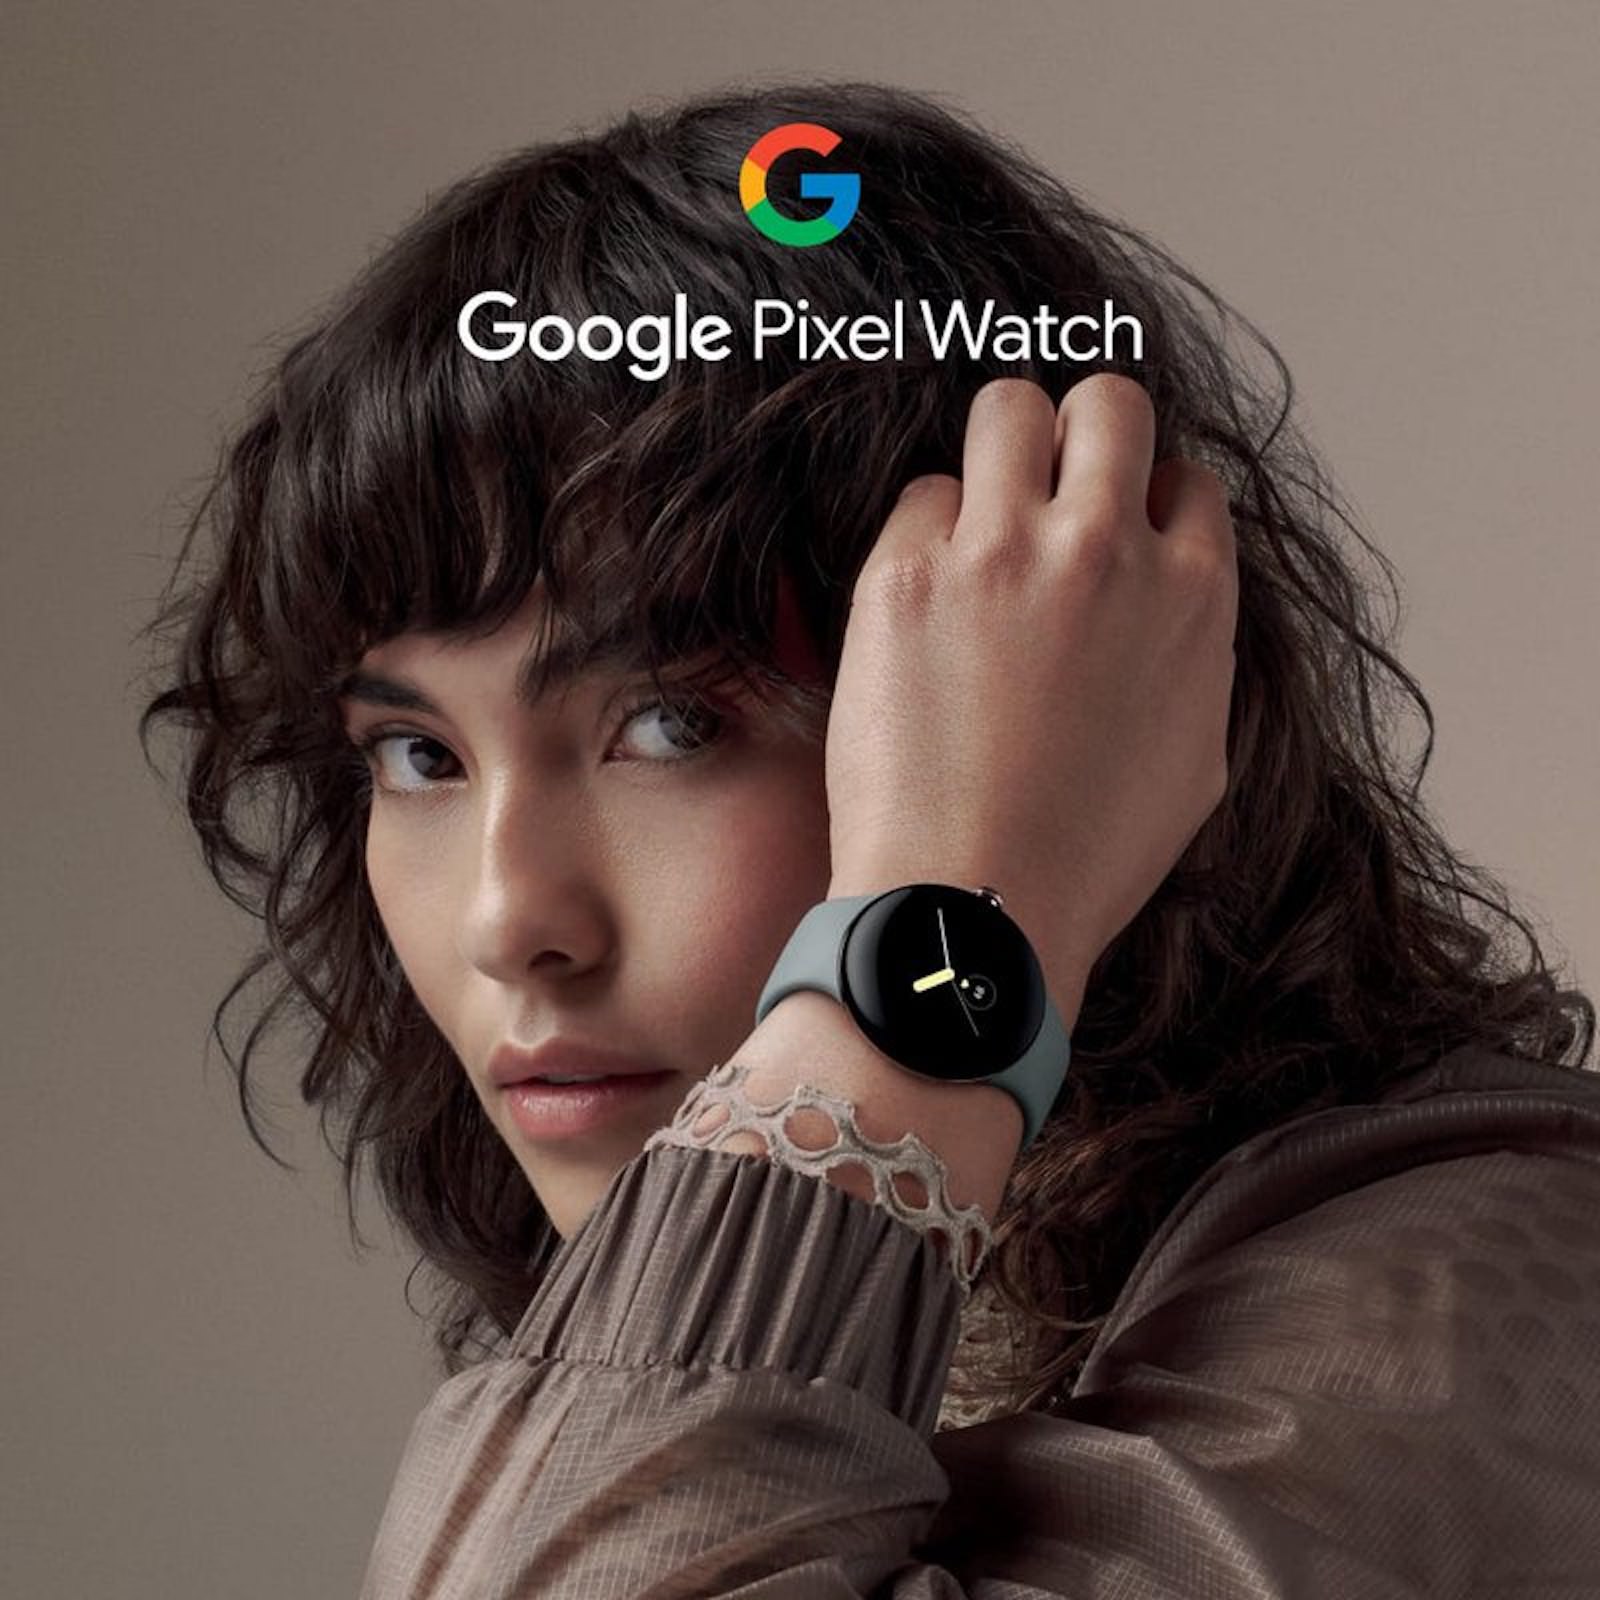 Google pixel watch marketing materials